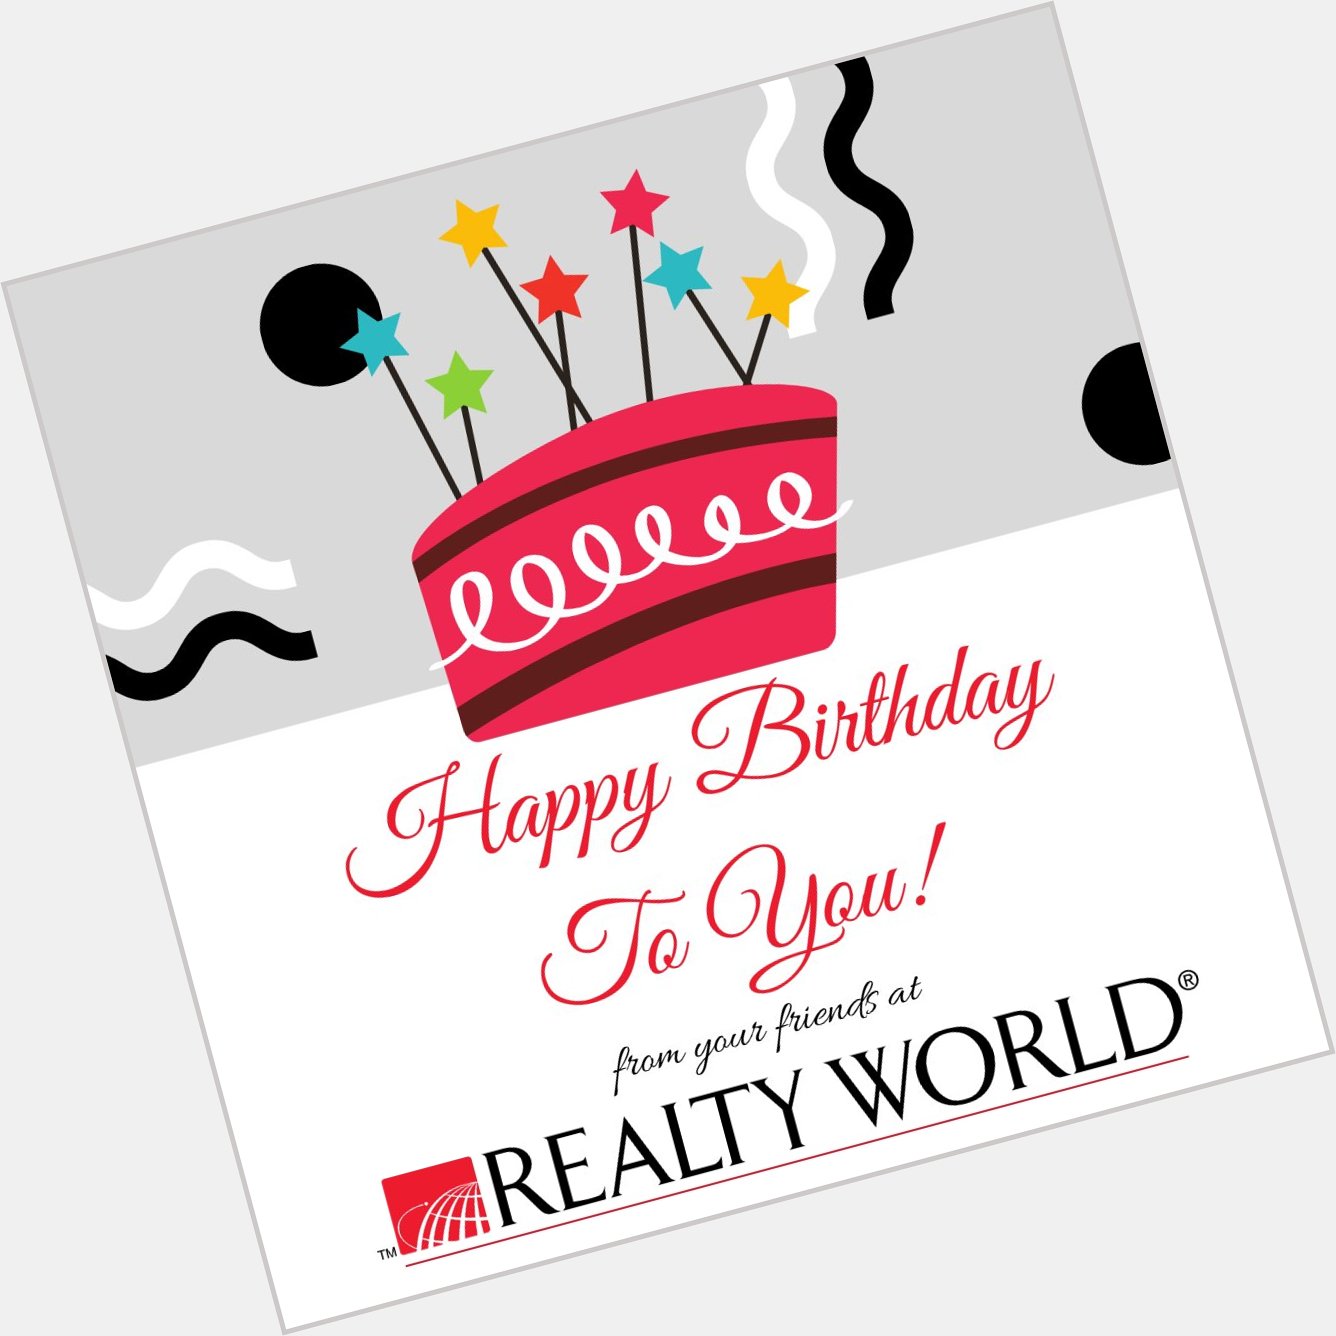 Happy Birthday to Jim Jordan of Realty World Indy! 